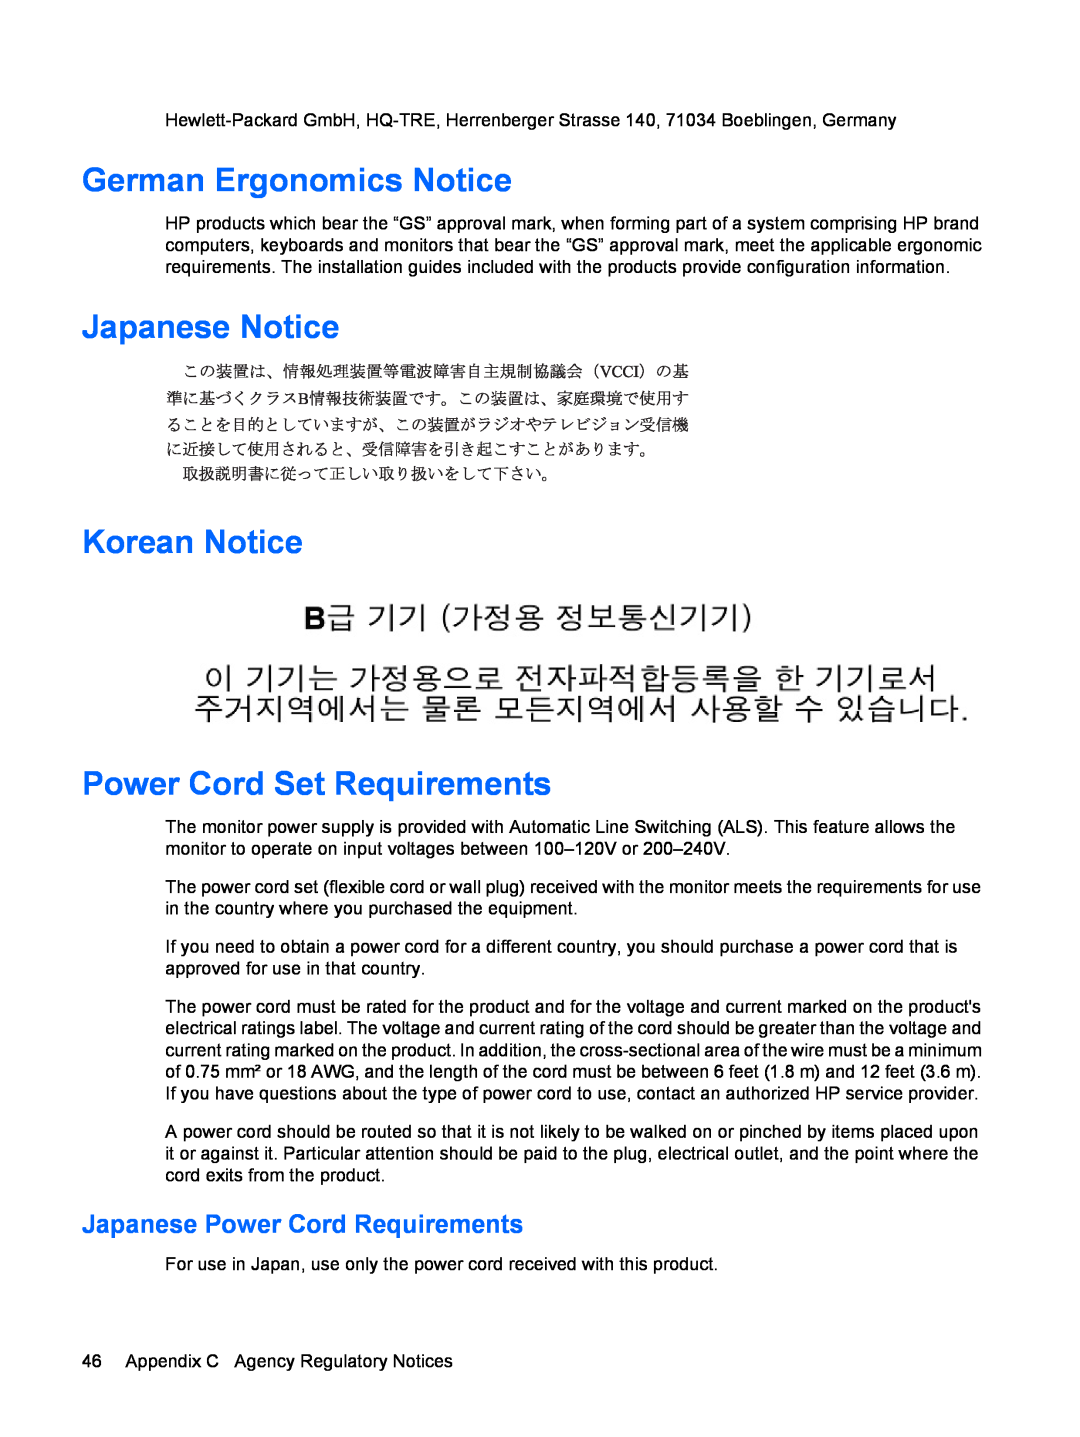 HP LP2275w manual German Ergonomics Notice, Japanese Notice Korean Notice Power Cord Set Requirements 